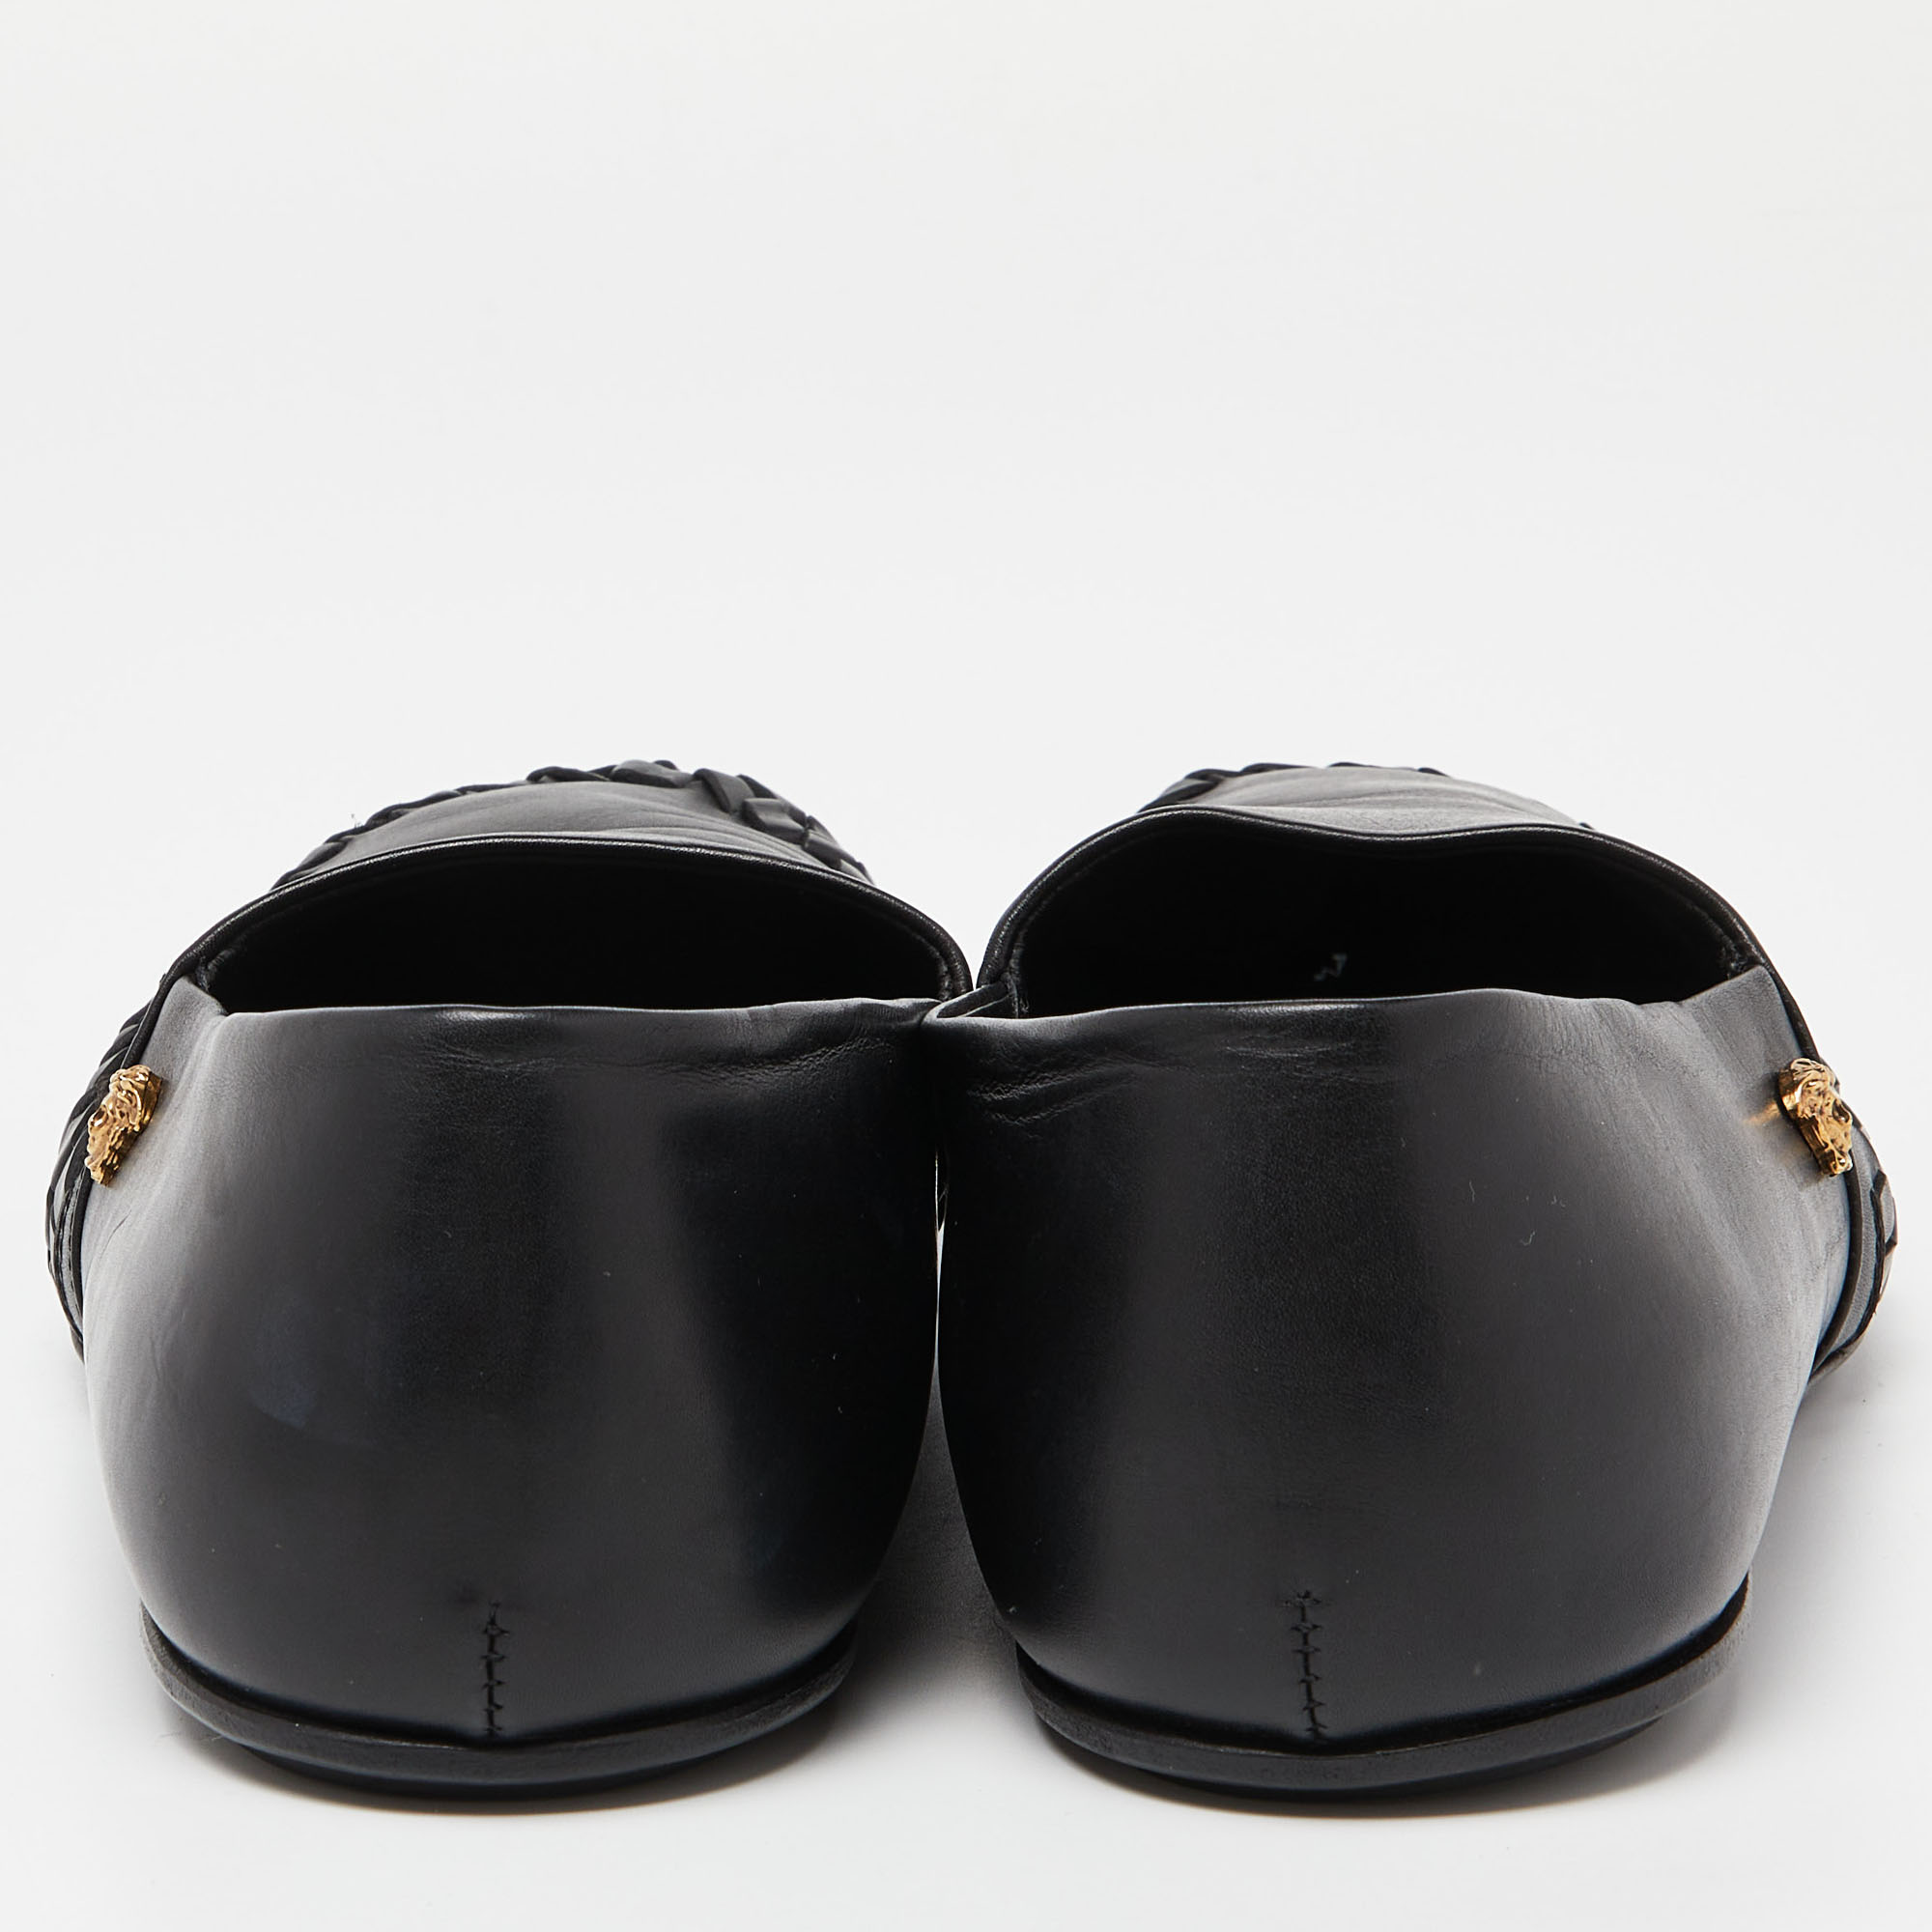 Versace Black Leather Medusa Slip On Loafers Size 42